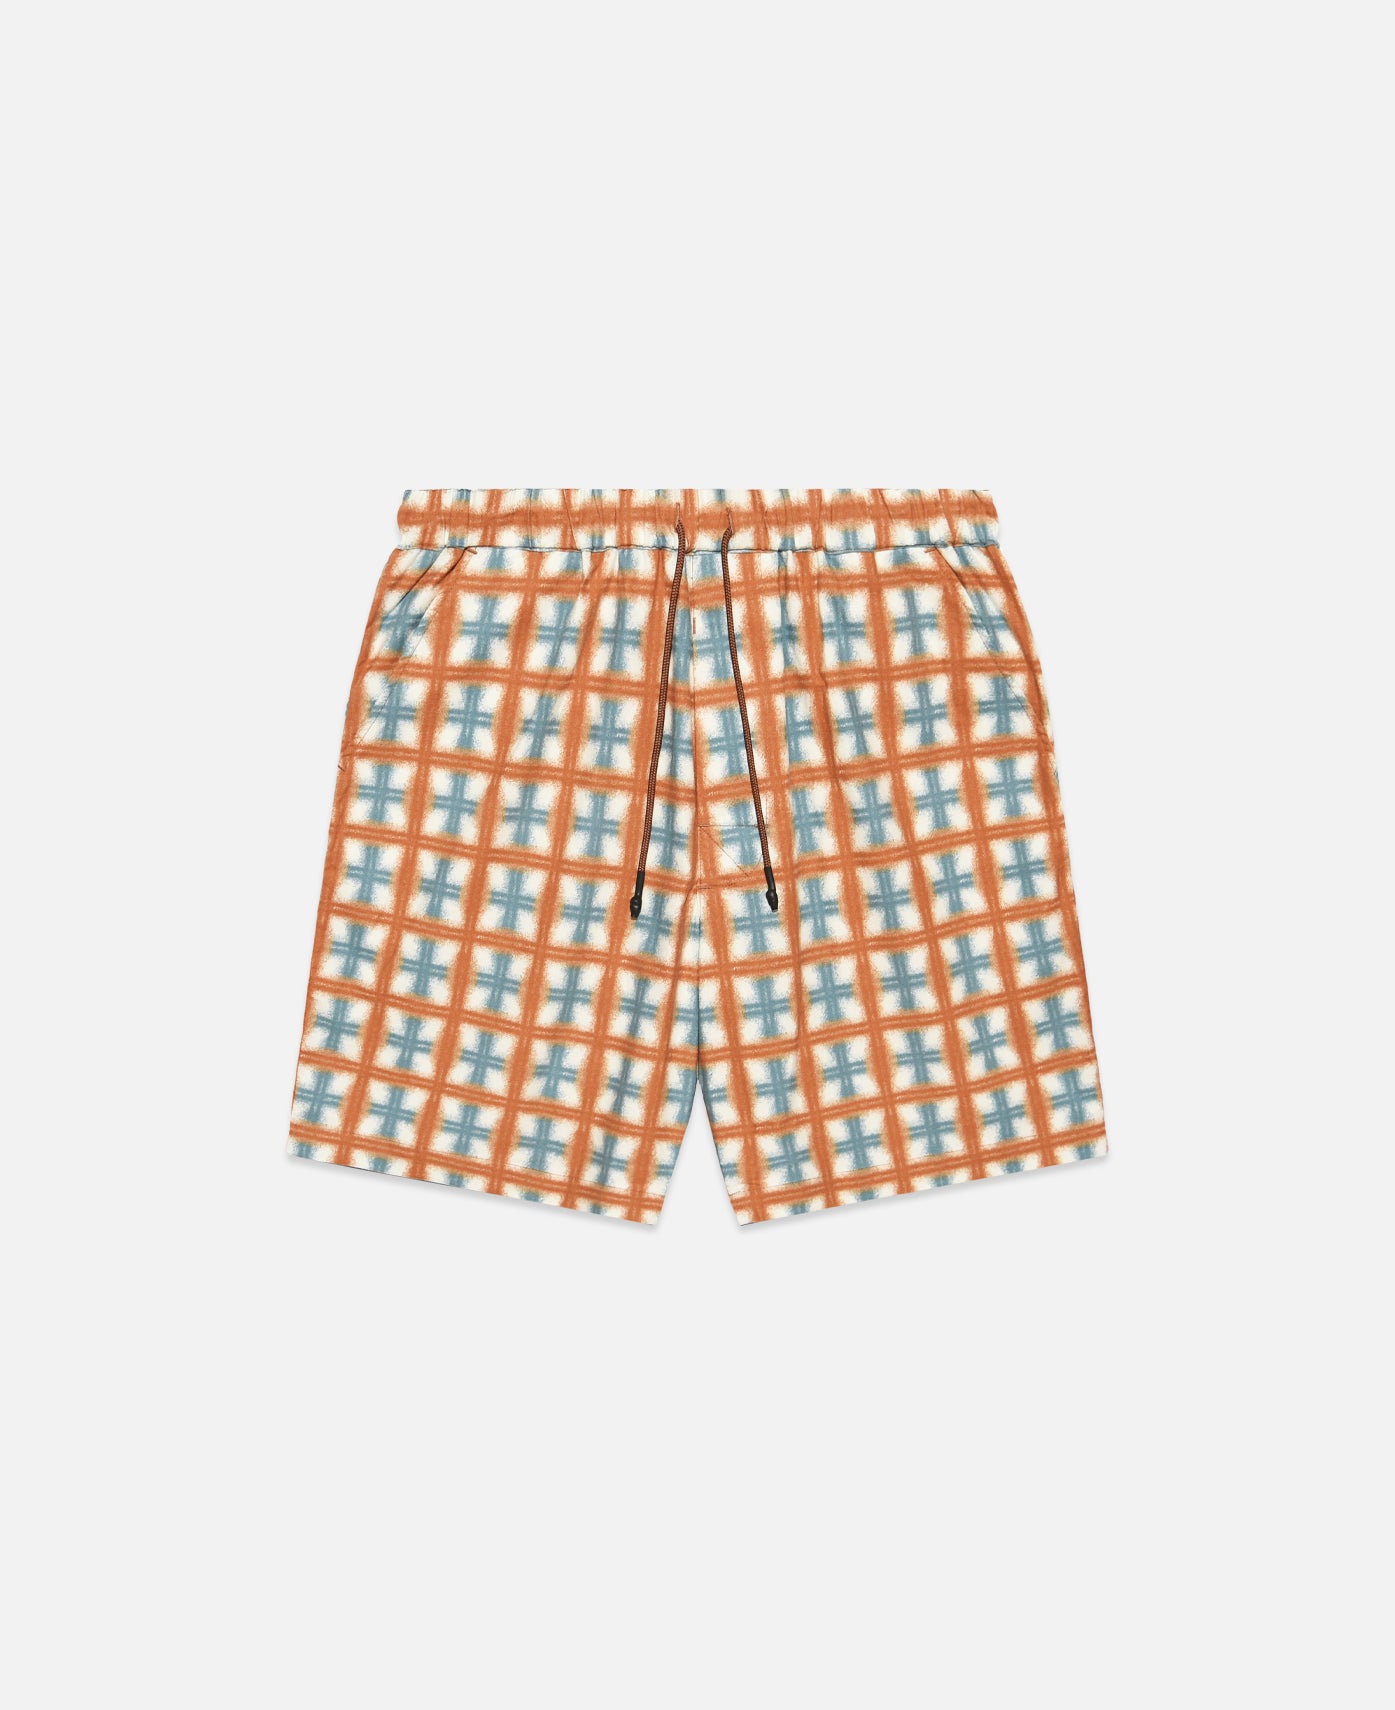 Beach Shorts (Orange)